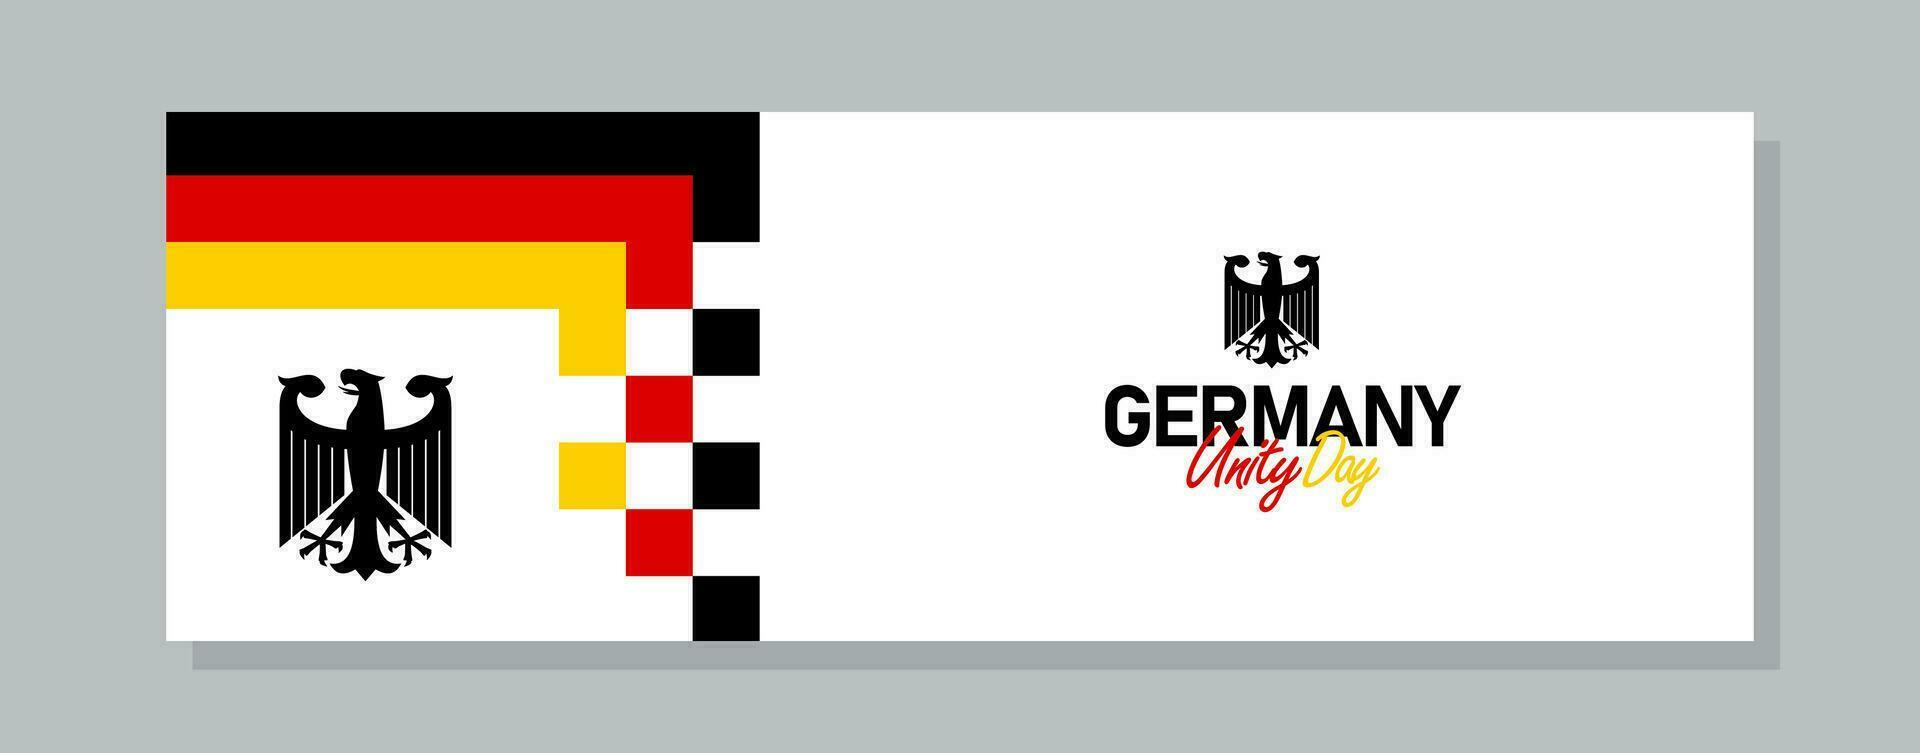 Tyskland Lycklig Tyskland oberoende dag horisontell baner design vektor illustration